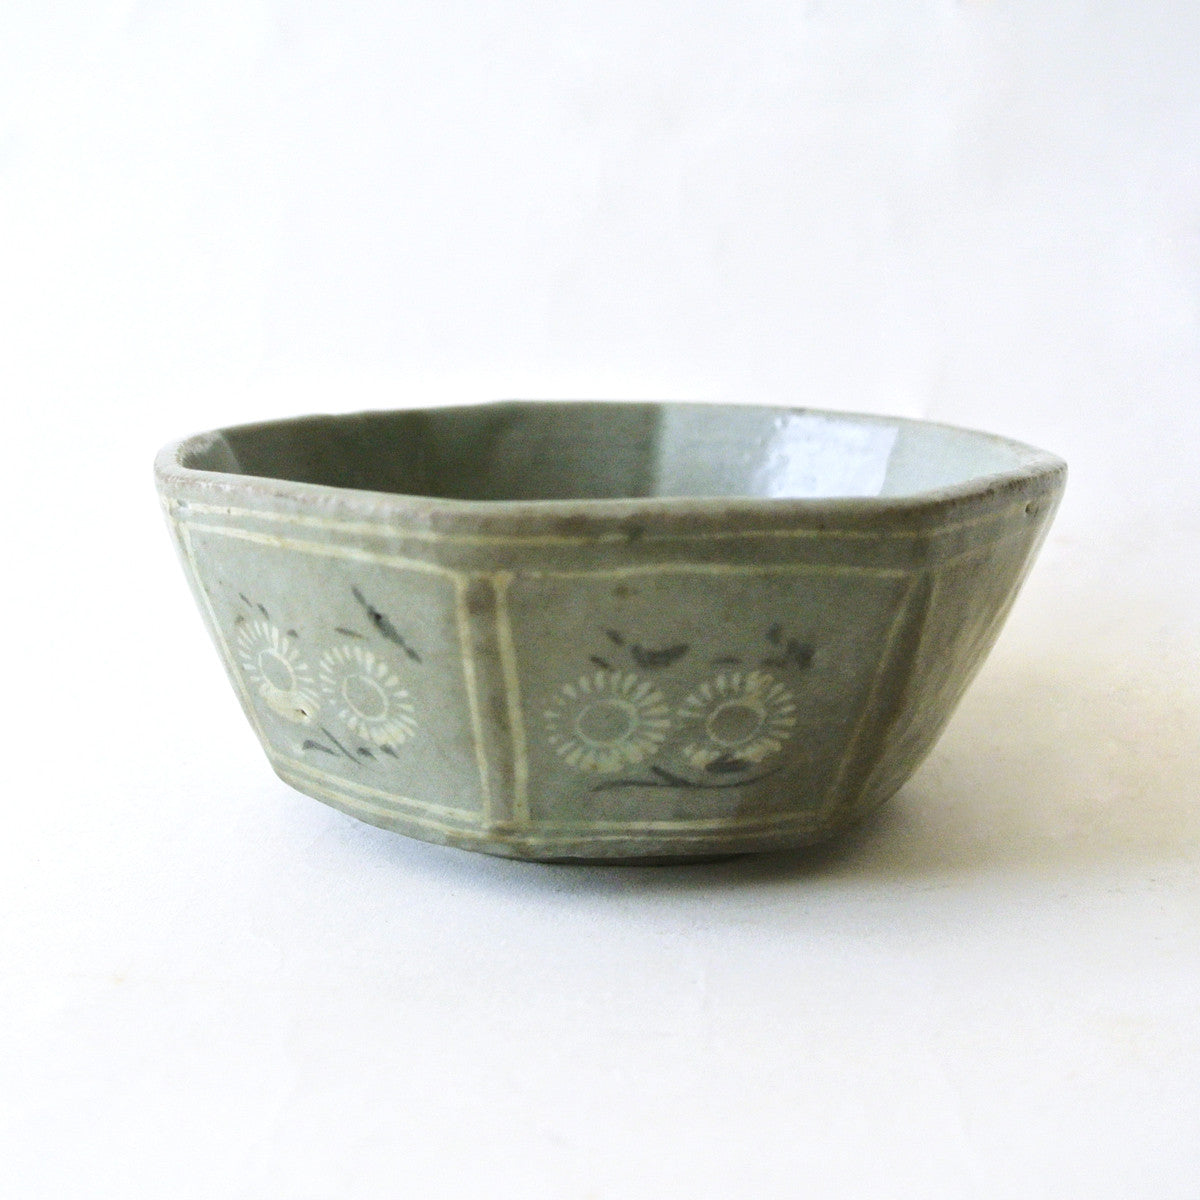 Inlaid Celadon Octagonal Bowl from 13th Century Koryo Period